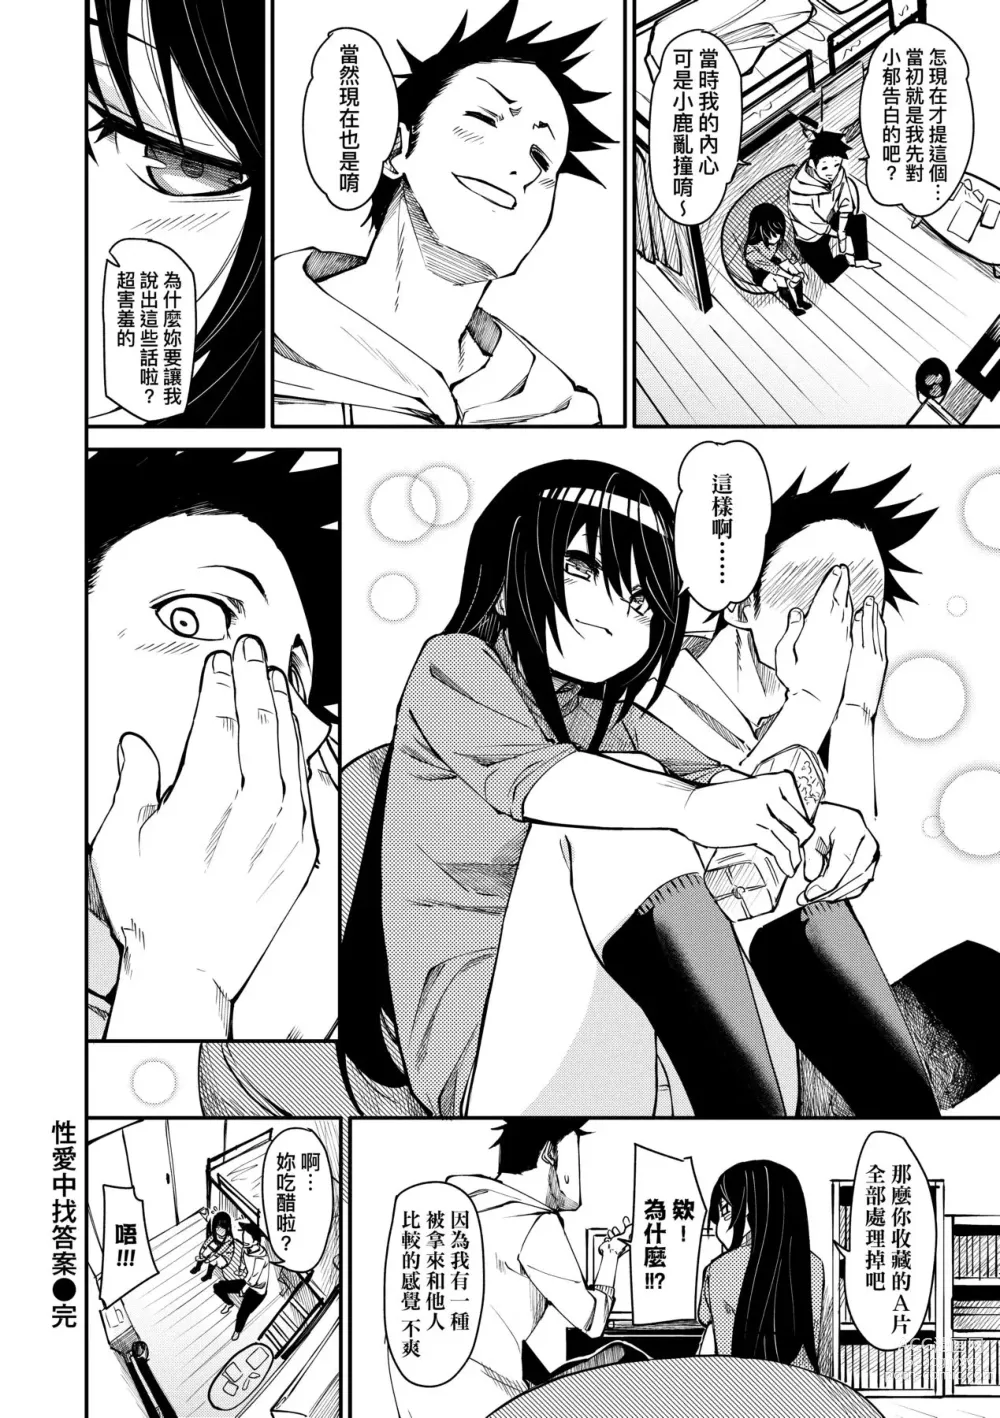 Page 33 of manga 思春少女夜有所夢